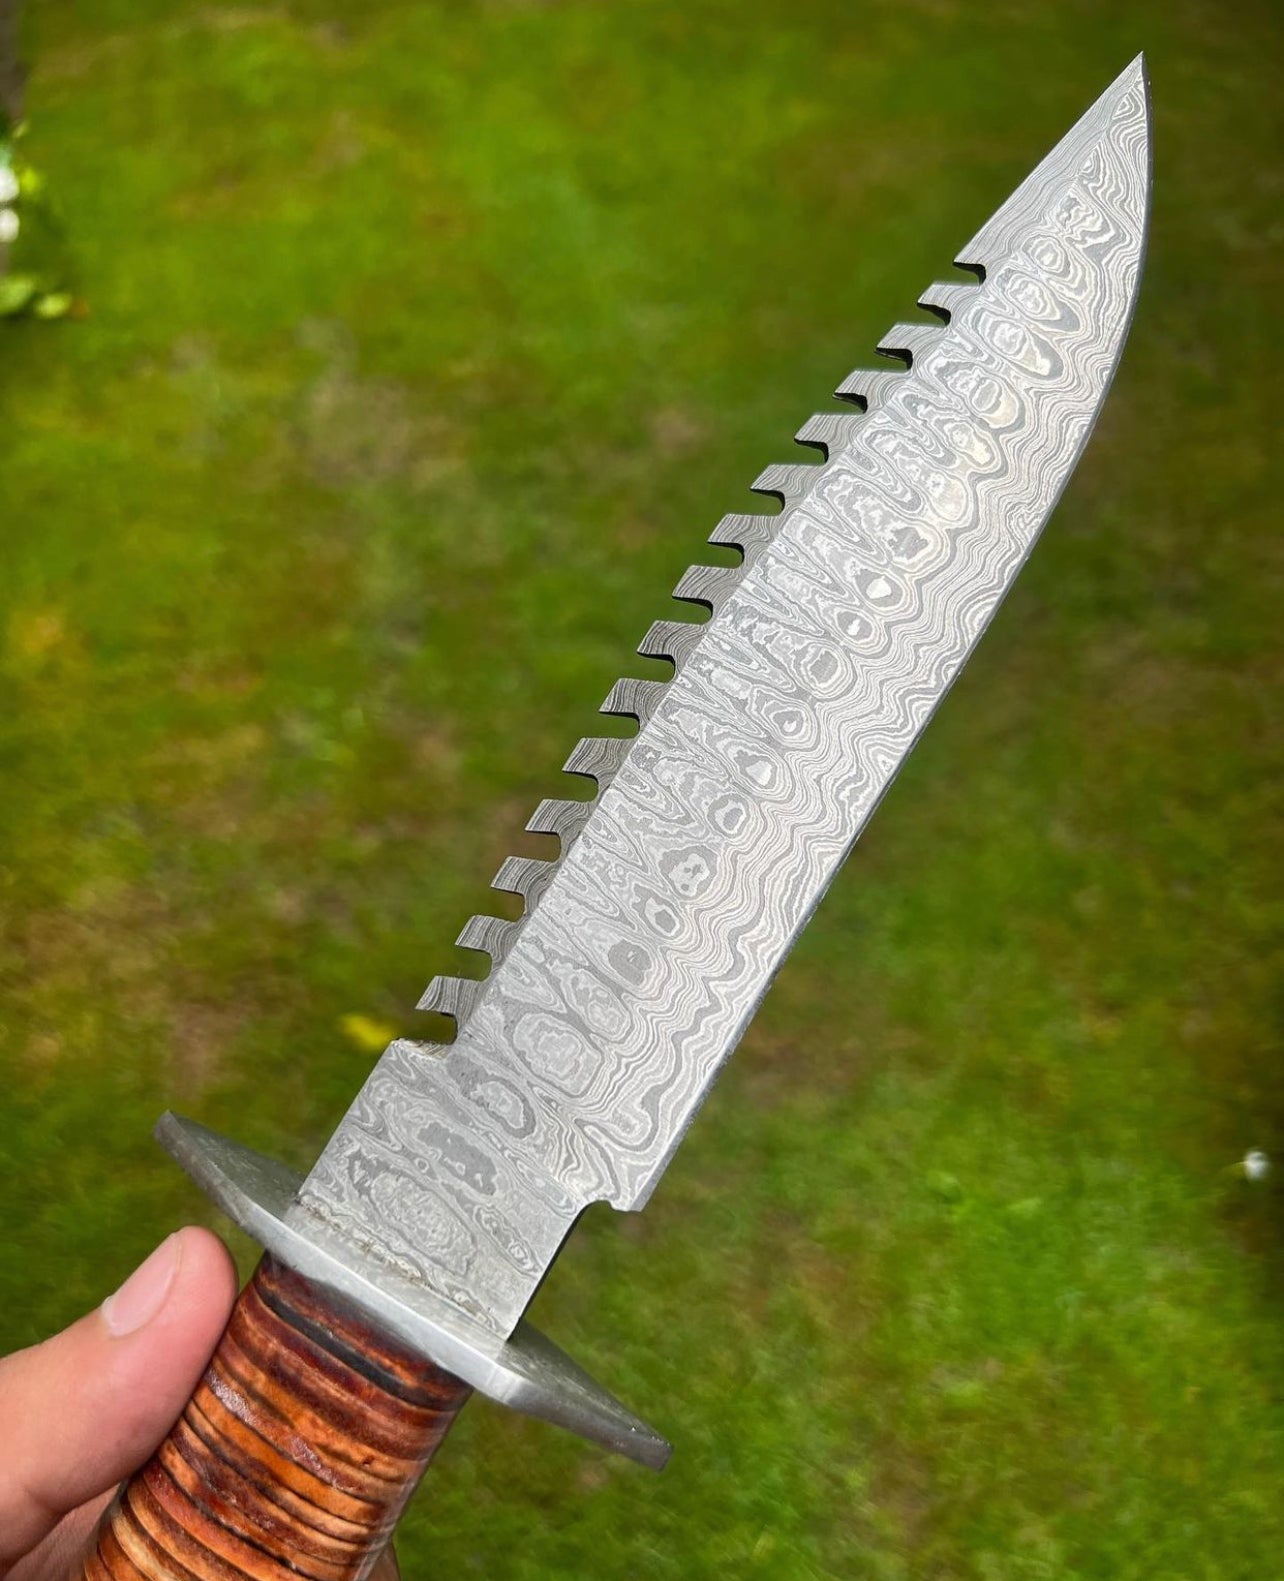 Handmade Damascus Steel Survival ka-bar Hunting knife